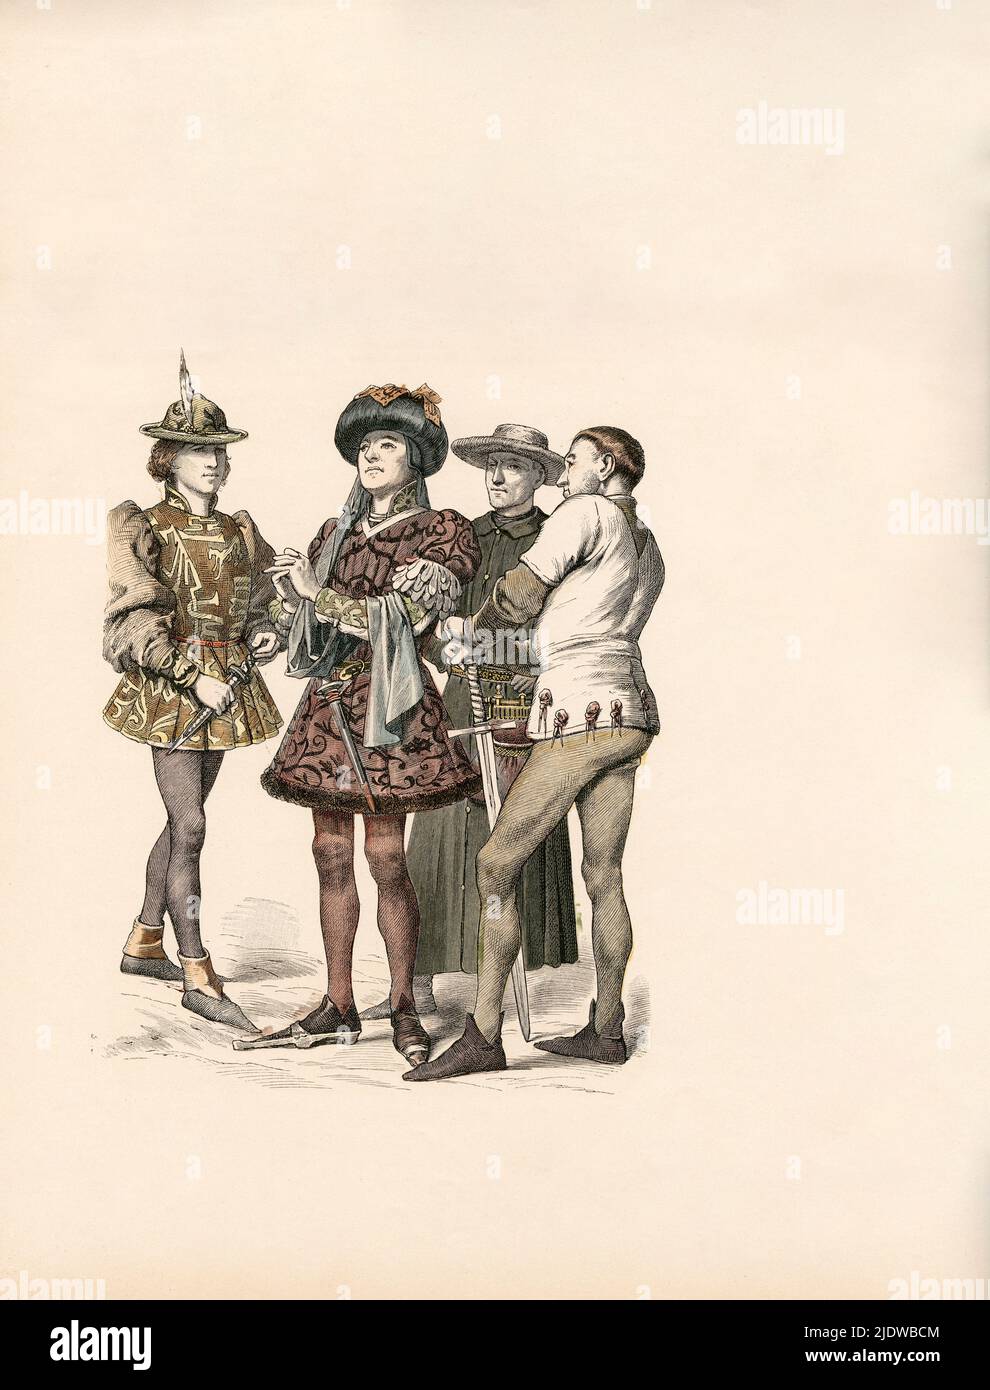 Burgundian Costumes, mid-15th Century, Illustration, The History of Costume, Braun & Schneider, Munich, Germany, 1861-1880 Stock Photo